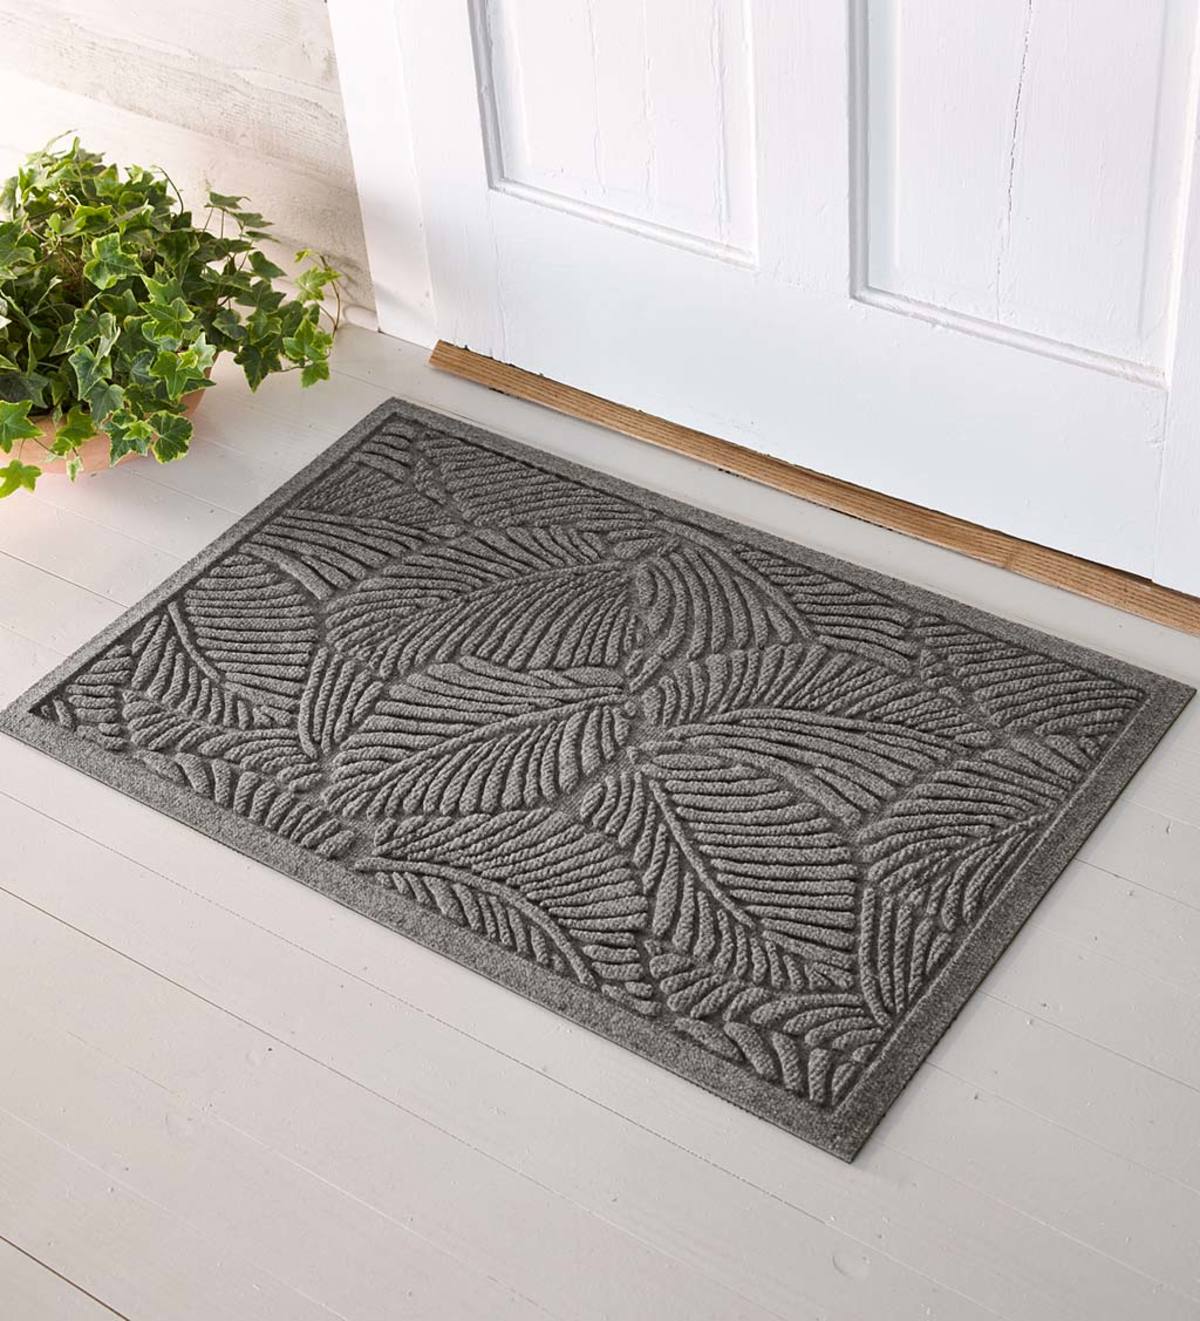 Waterhog Fern Doormat, 2' x 5'